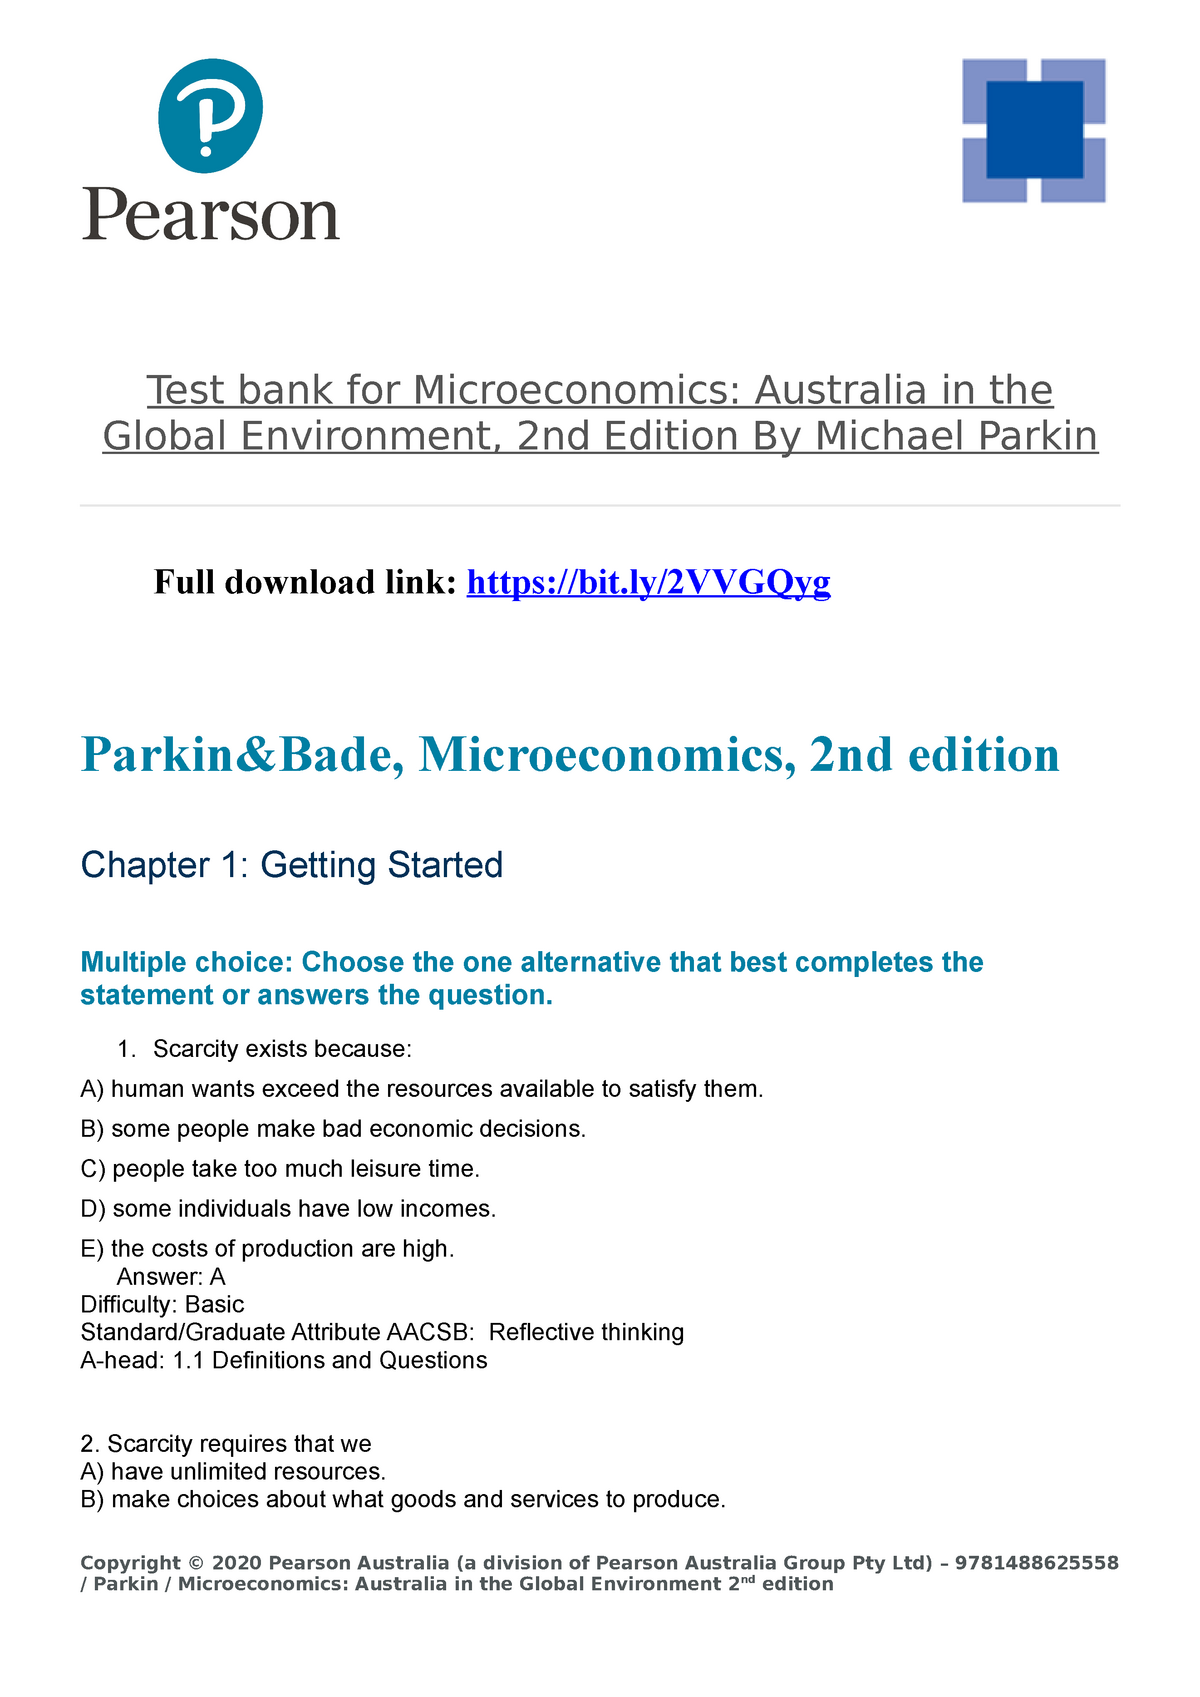 microeconomic statement